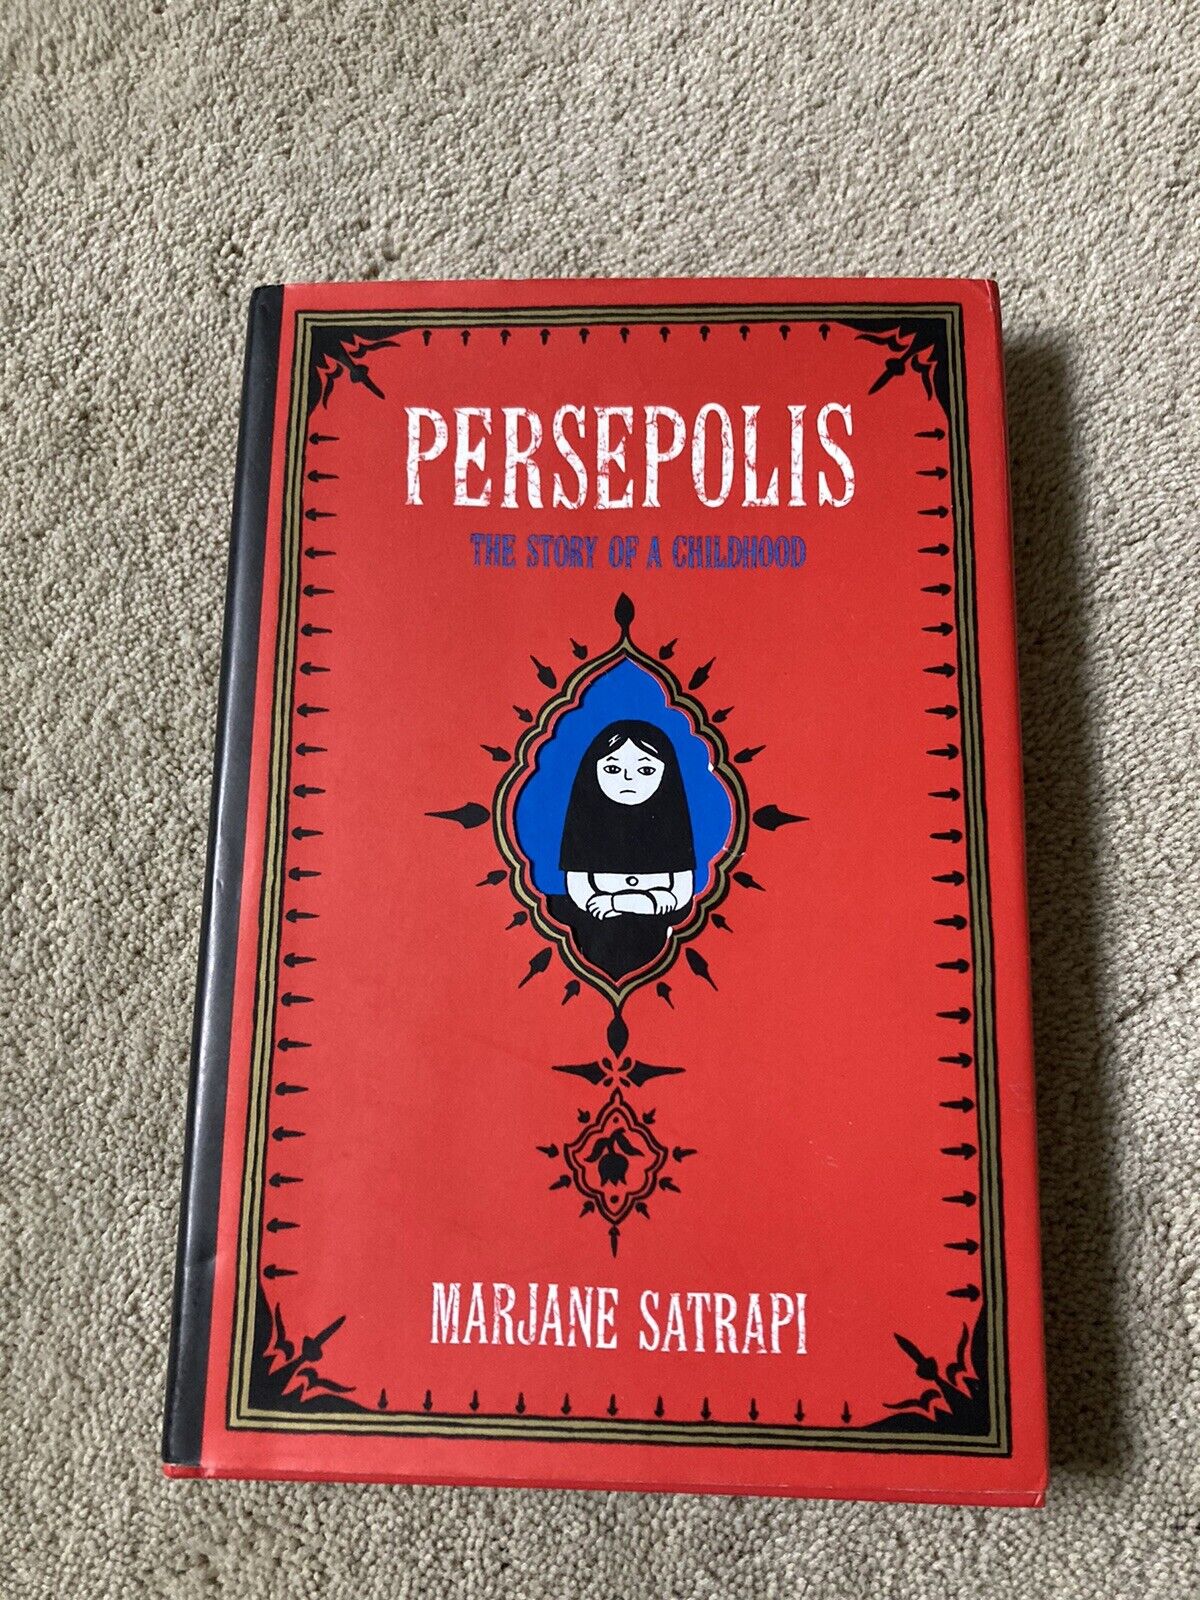 Persepolis, Marjane Satrapi. Pantheon 2003. Signed 2nd printing.